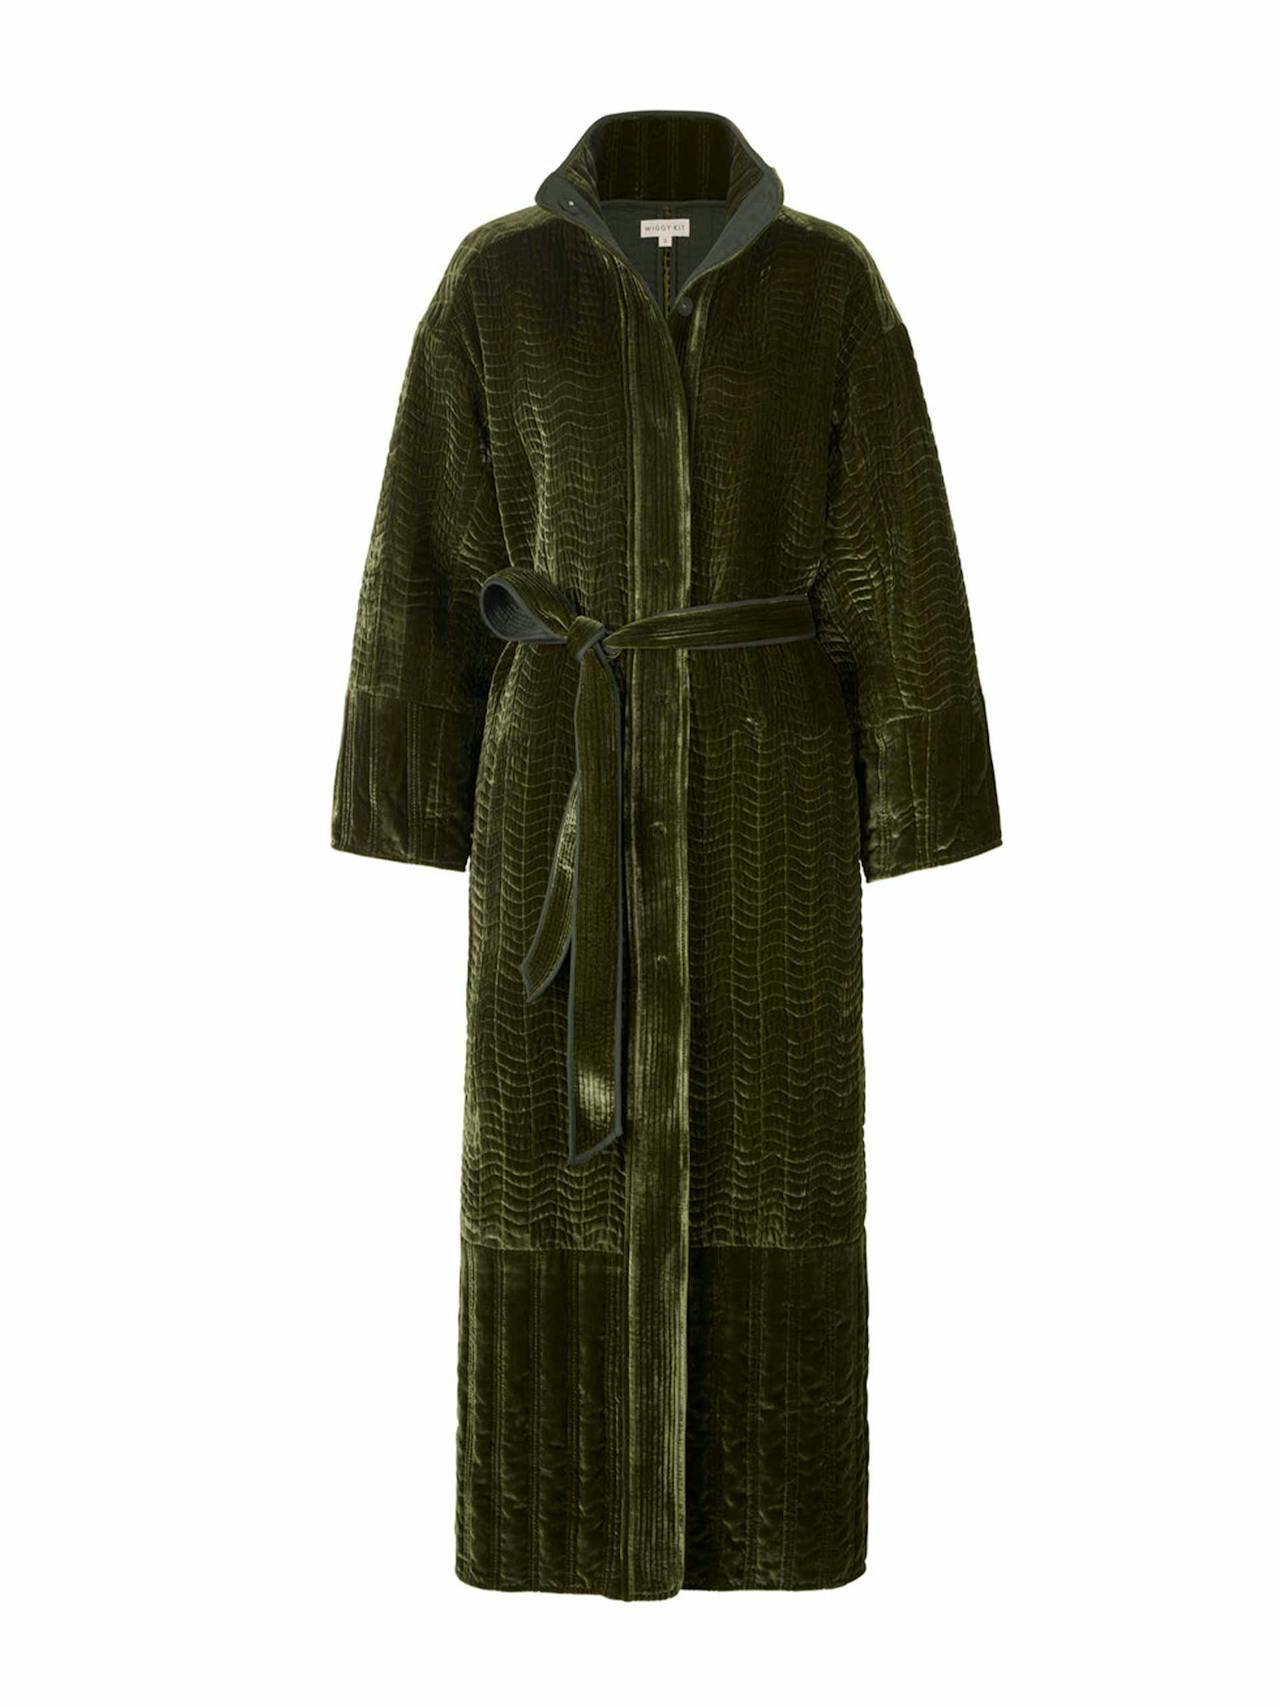 Green velvet quilted coat